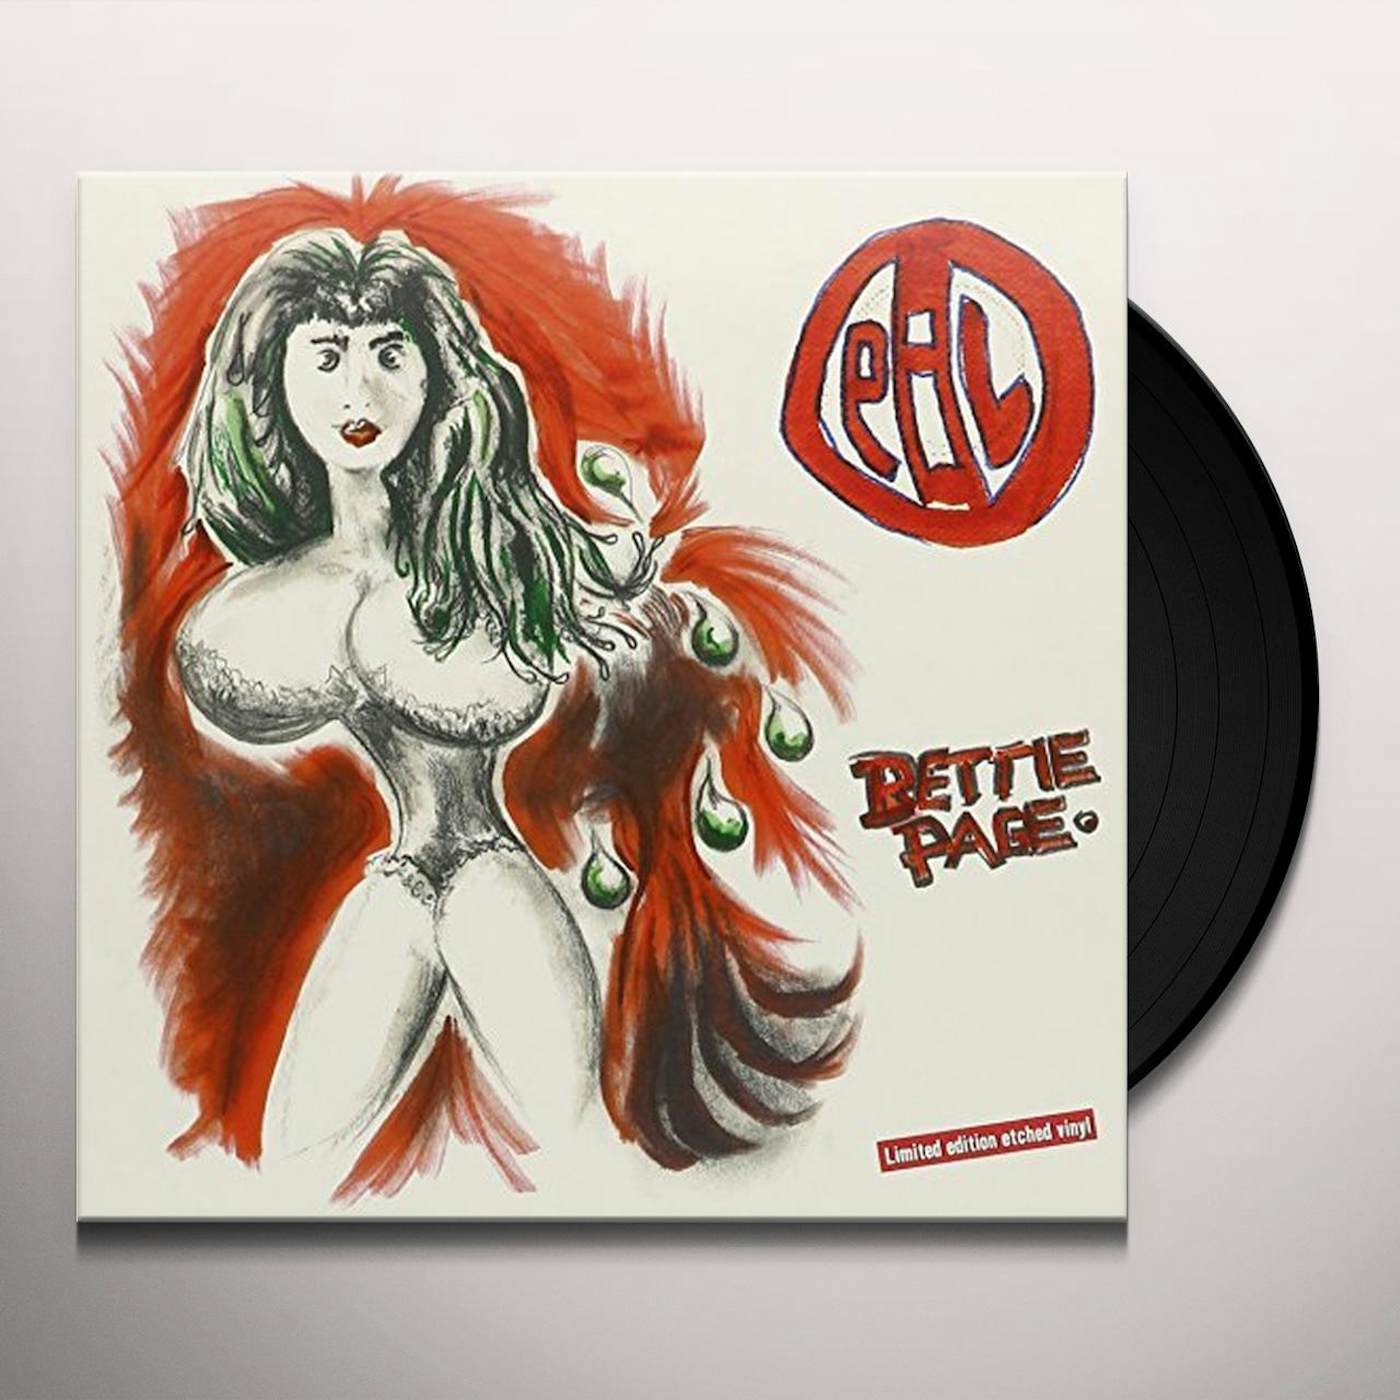 Public Image Ltd. BETTIE PAGE Vinyl Record